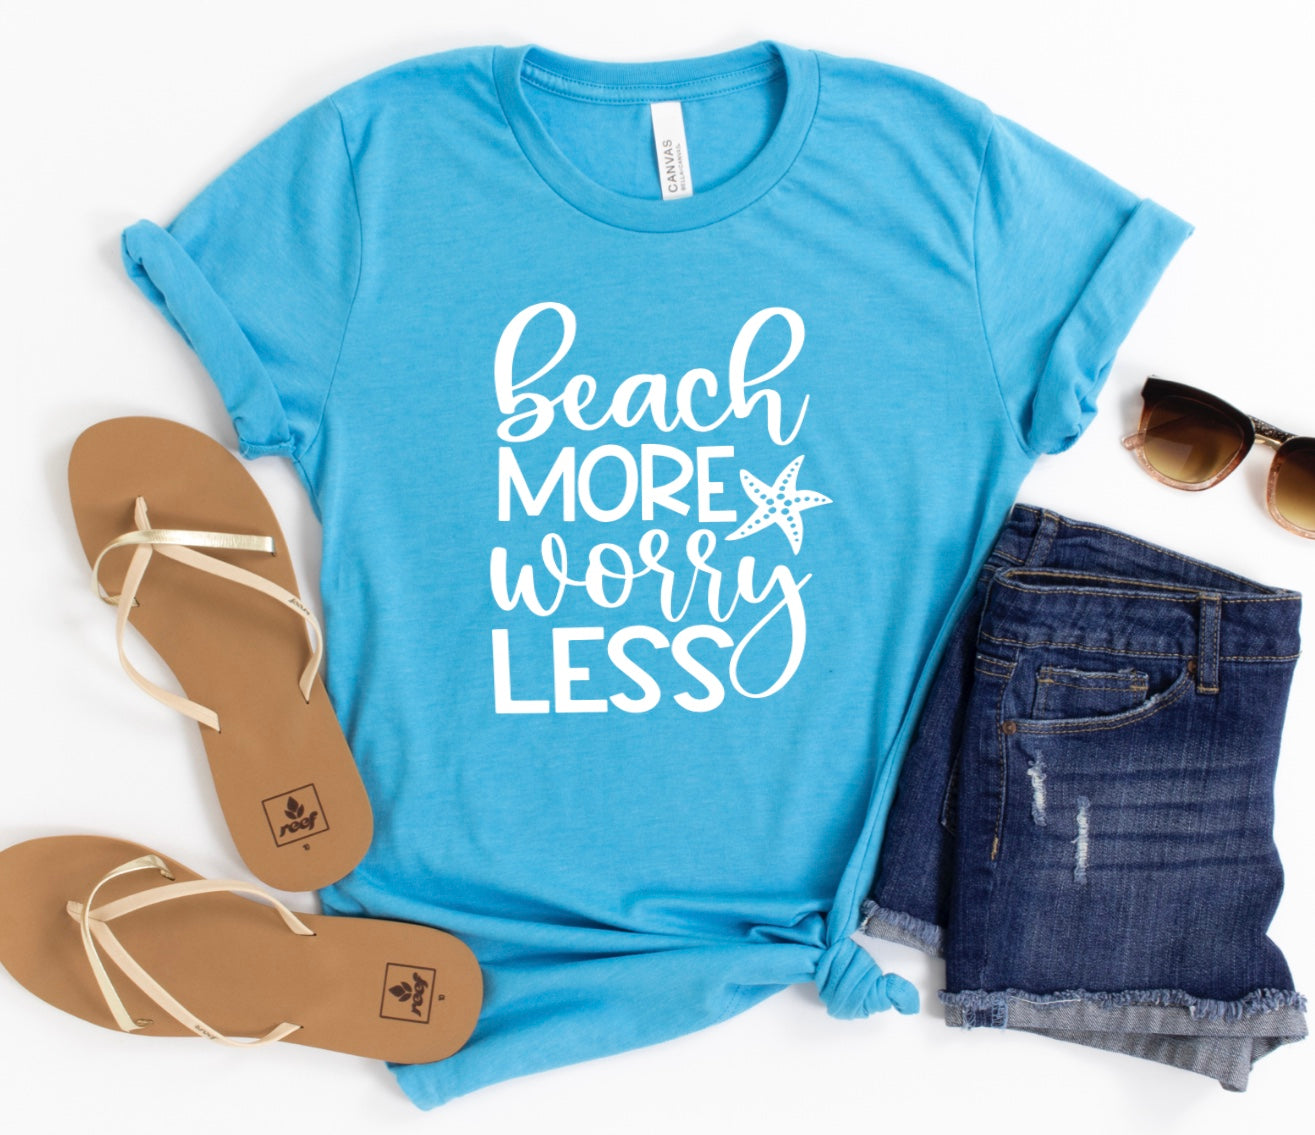 Beach more worry less t-shirt 